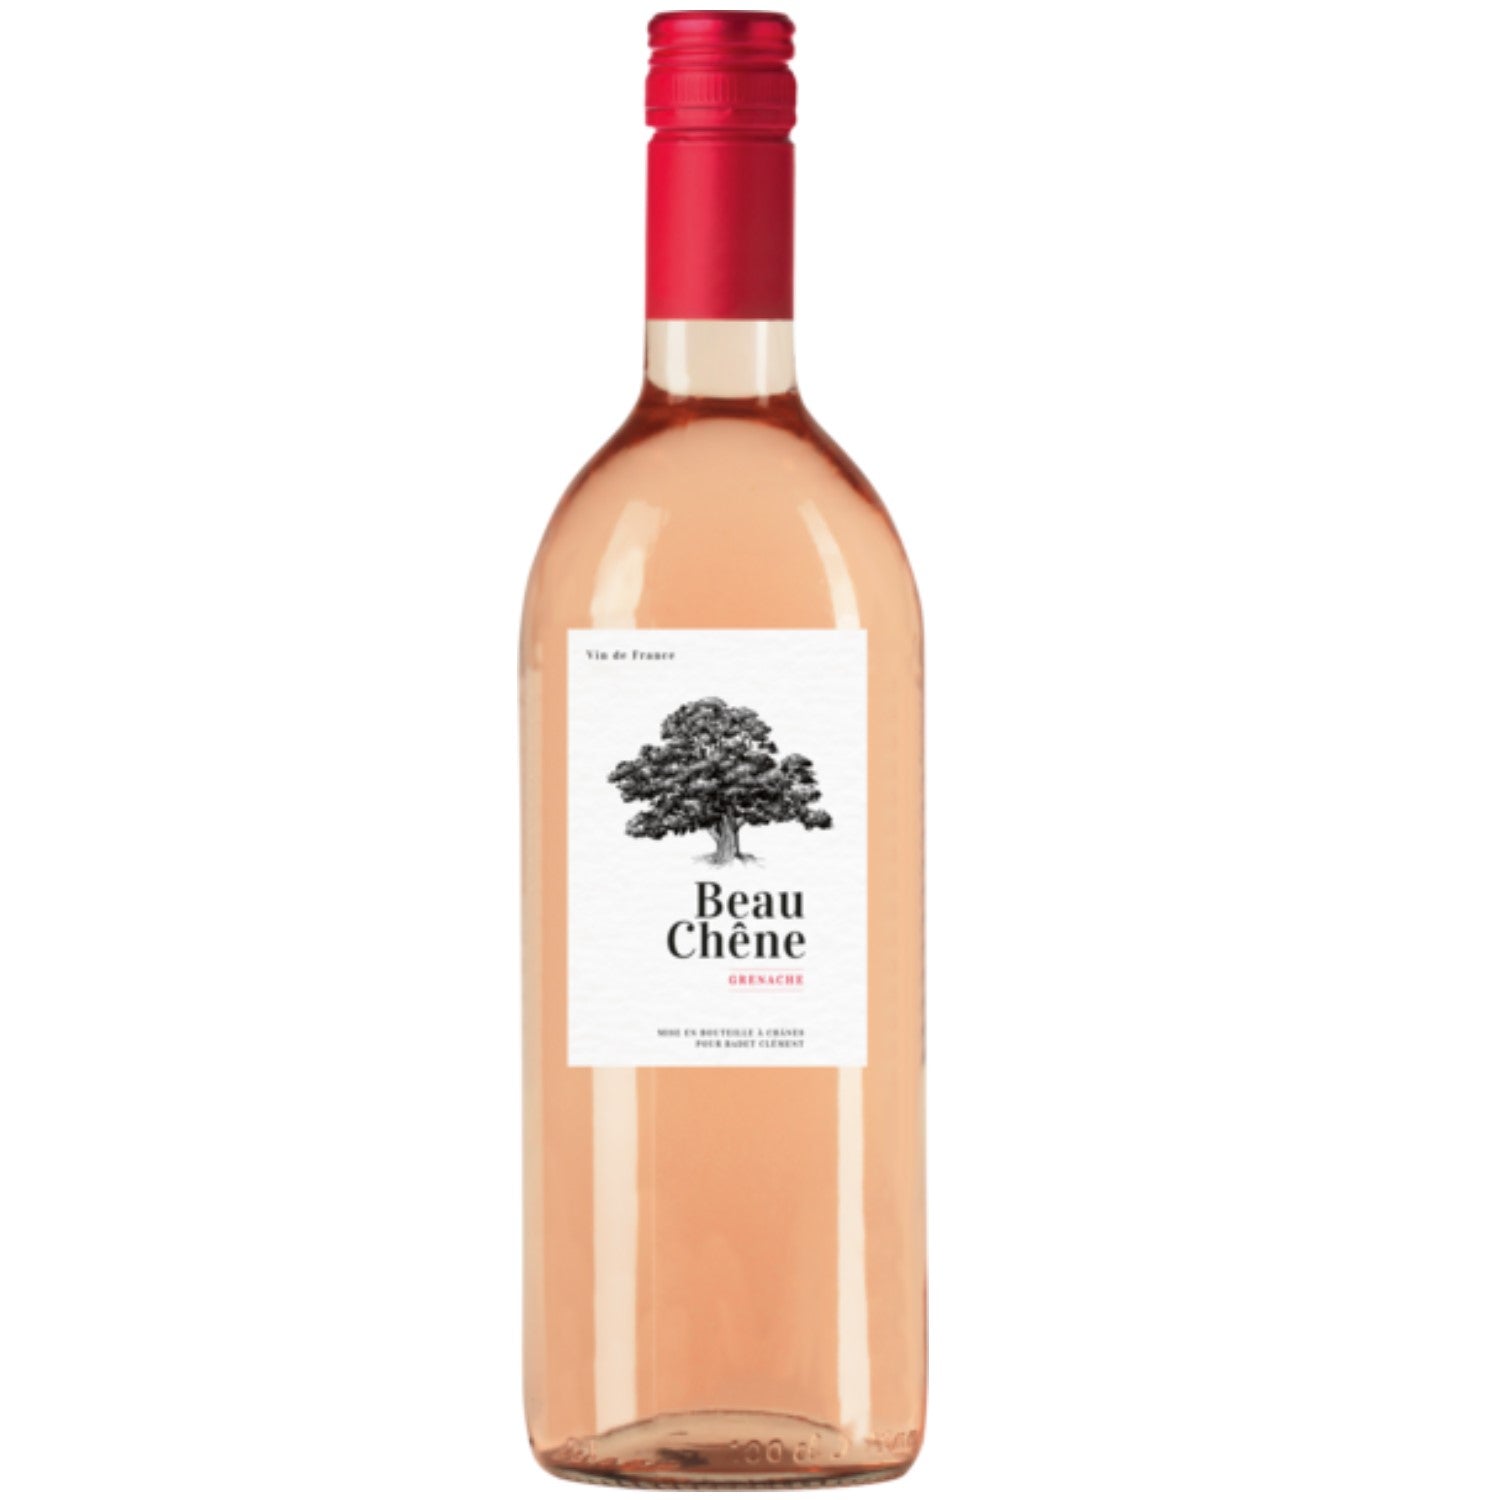 Beau Chêne Grenache Rosé Vin de France Roséwein Wein trocken Frankreich (6 x 0.75l) - Versanel -